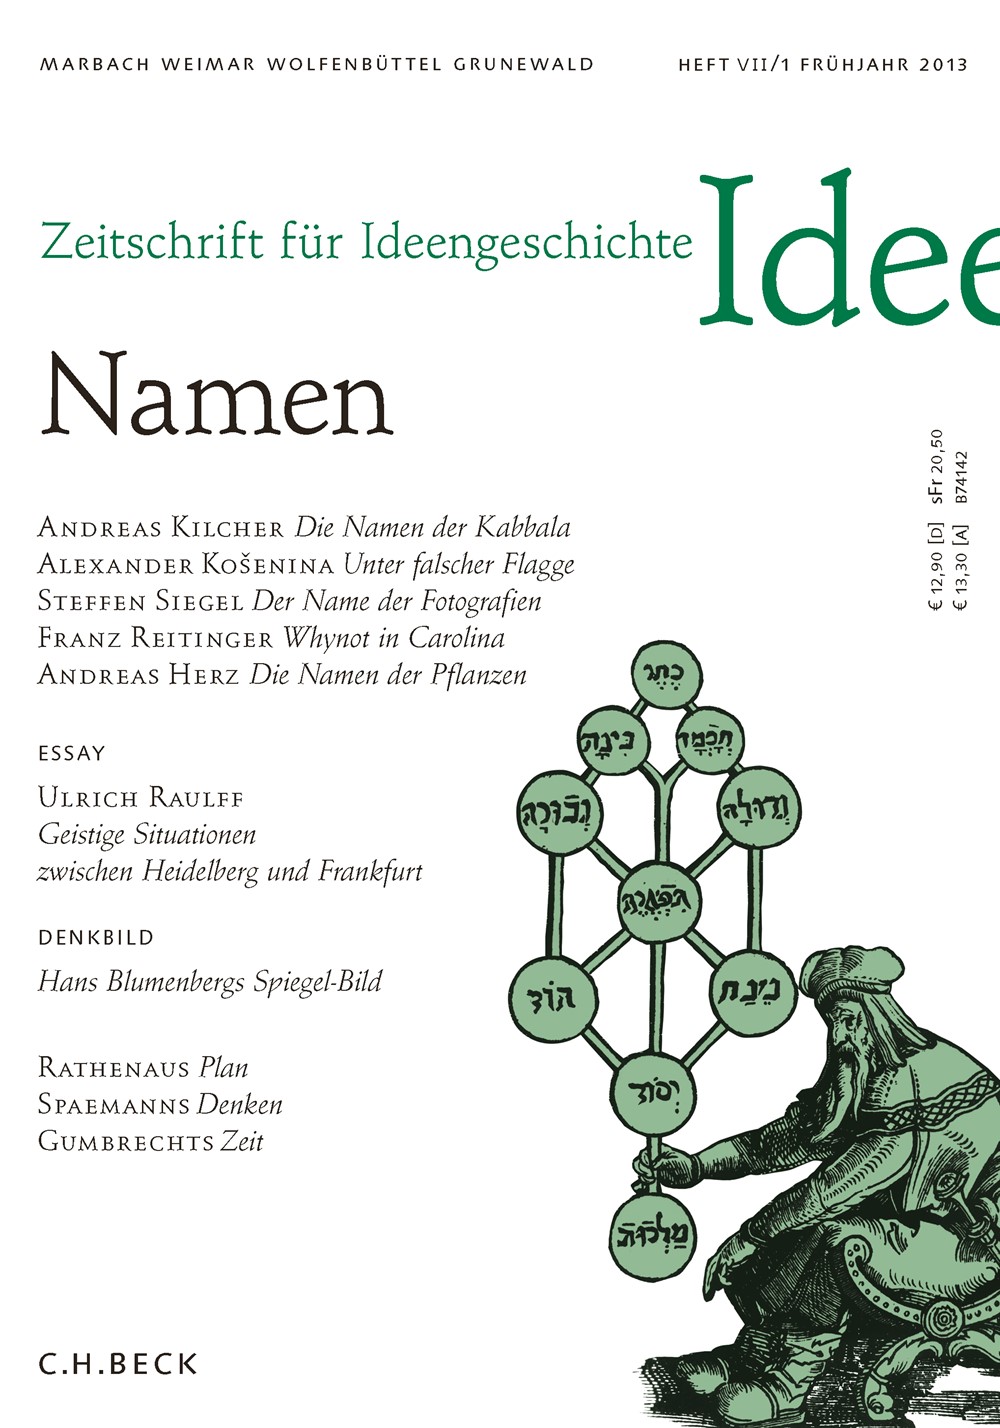 cover of Heft VII/1 Frühjahr 2013